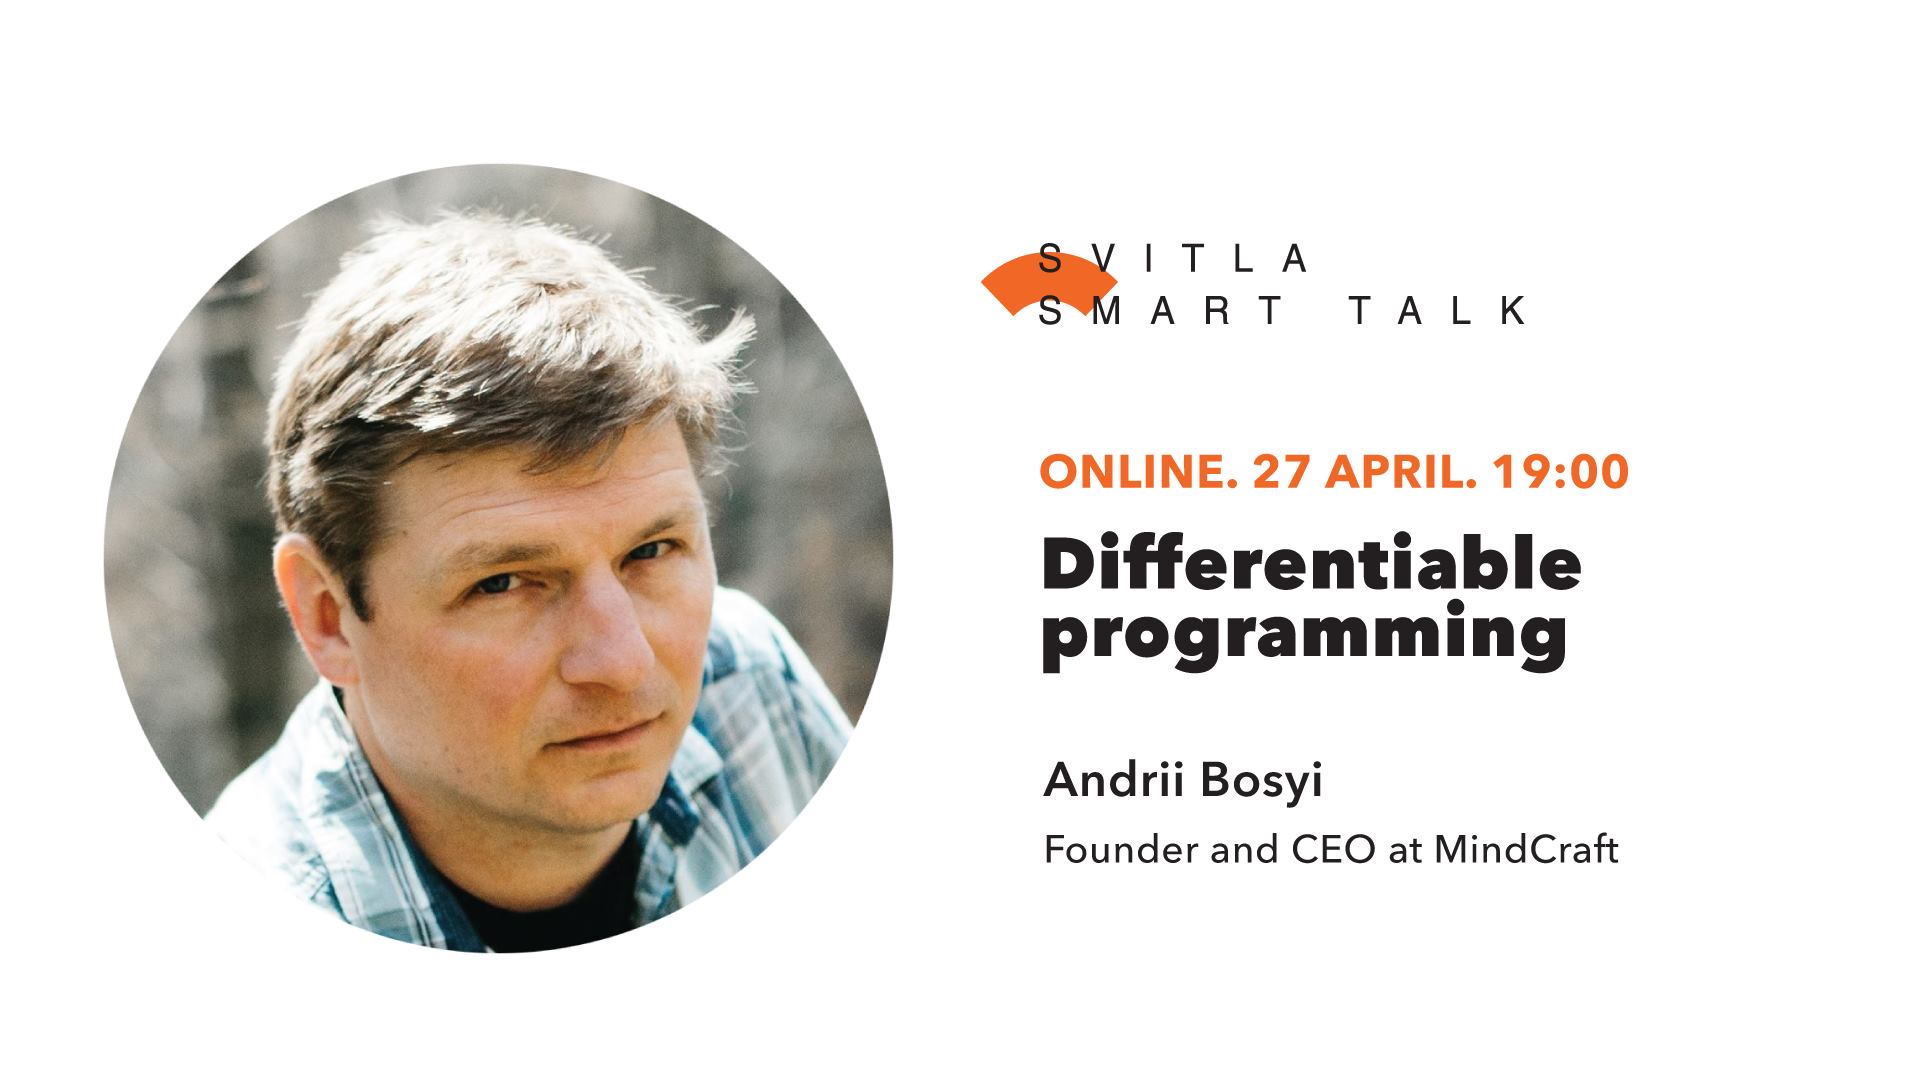 Svitla Smart Talk (online): Differentiable programming